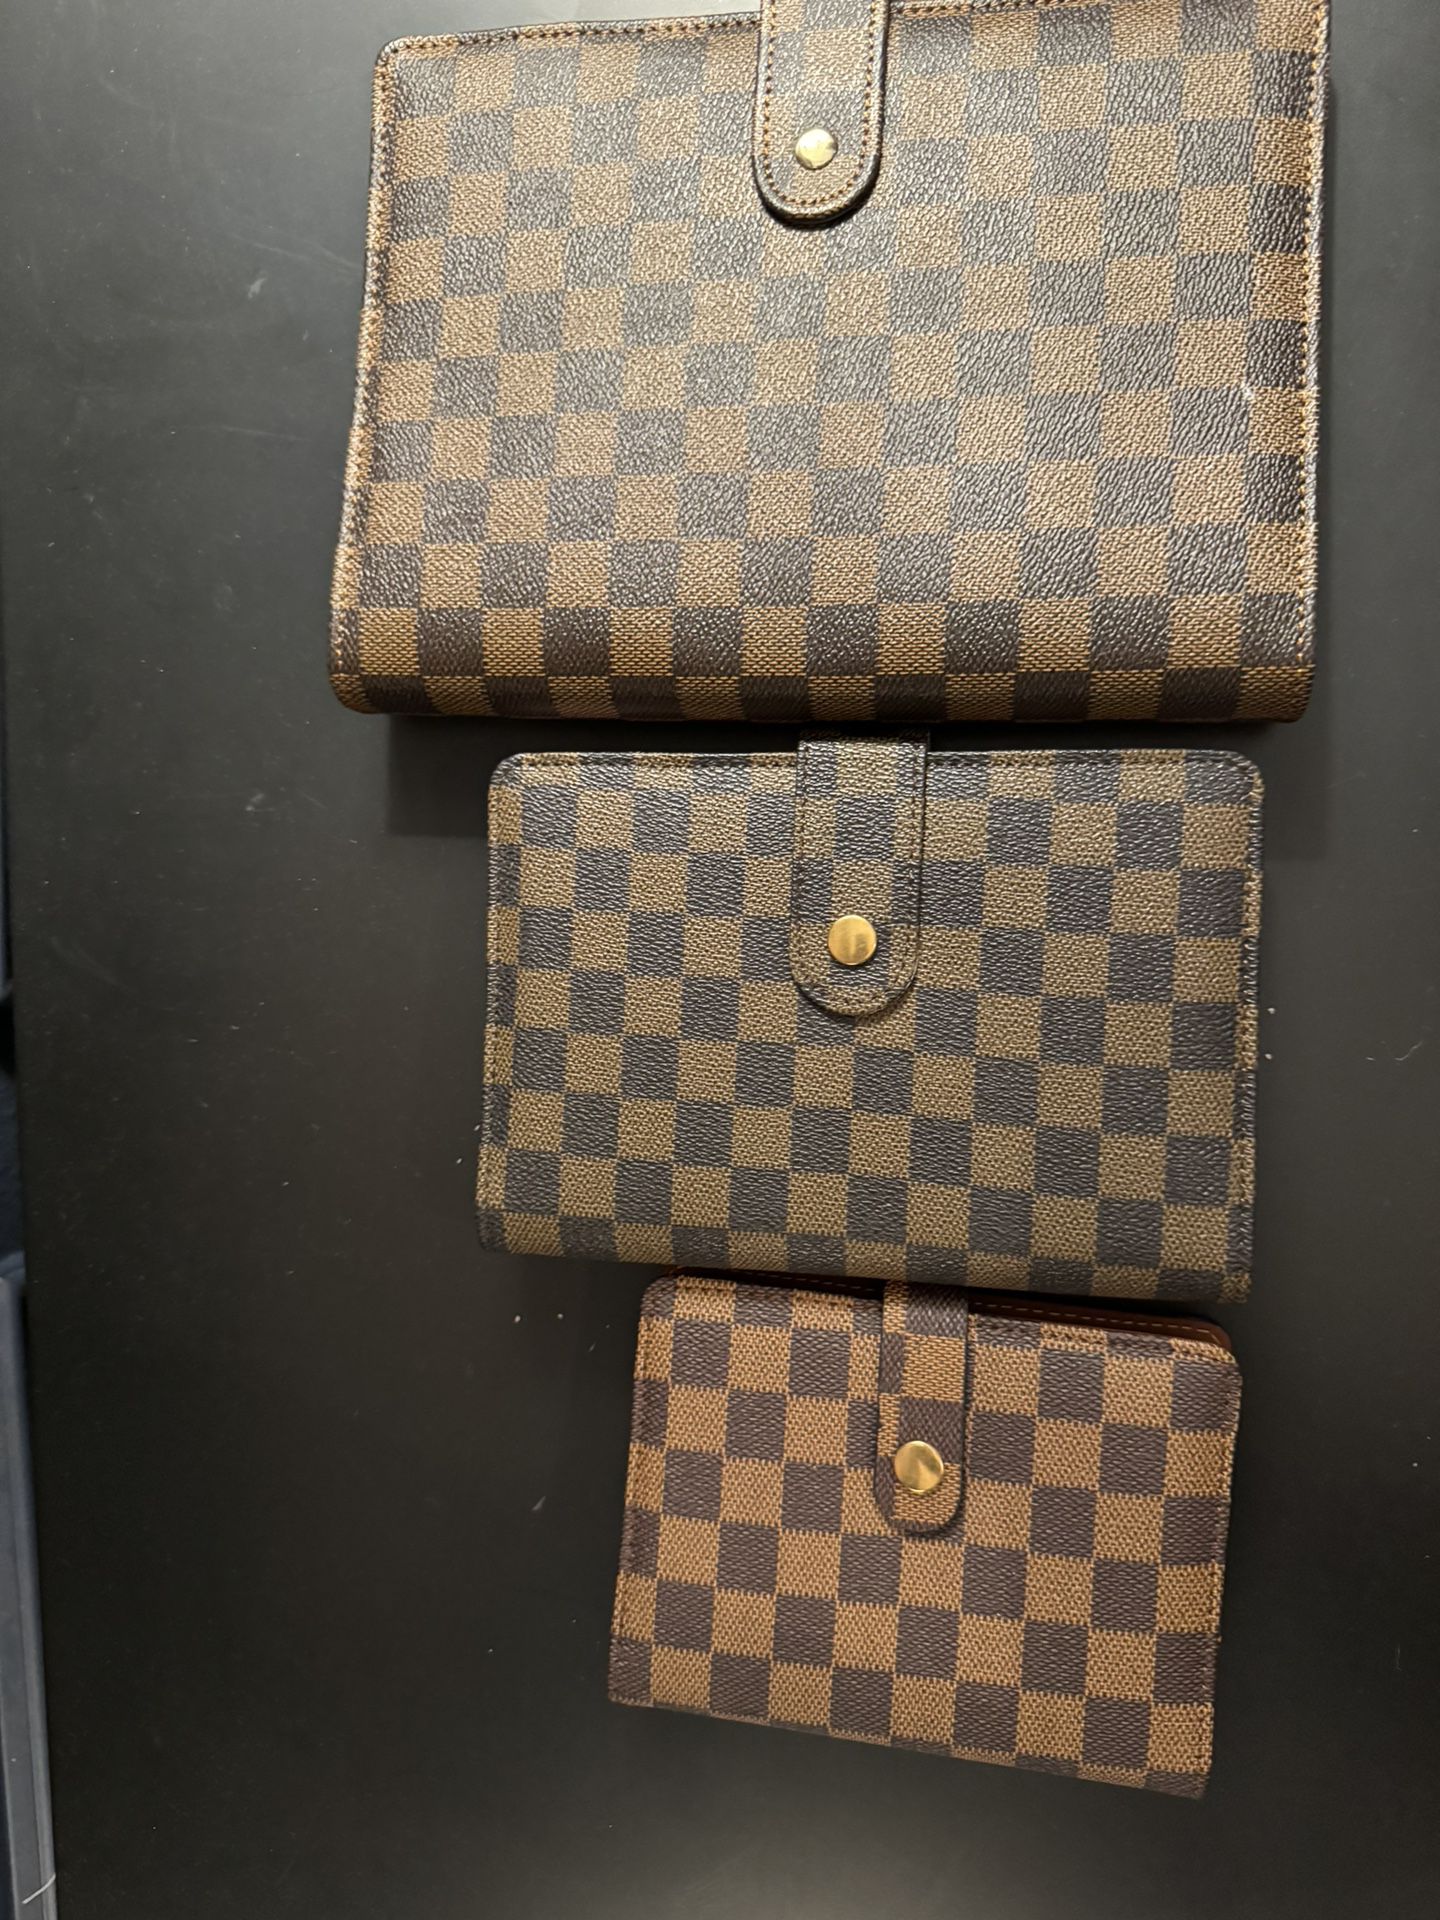 12 Brown Checkered Journals - A7 A6 A5 - 4 Each - Lines Uneven - $5 Each 